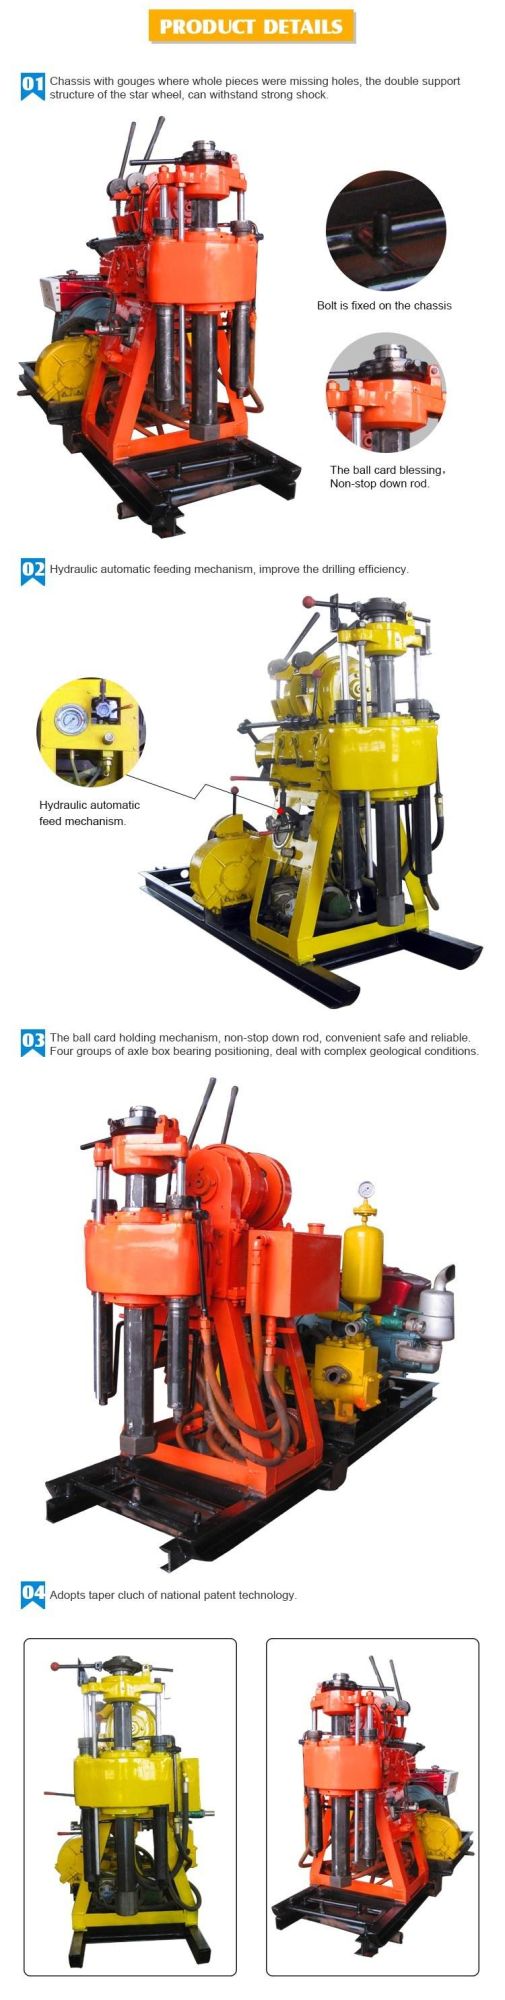 D Miningwell Hydraulic Borehole Drilling Machine Geological Drilling Rig